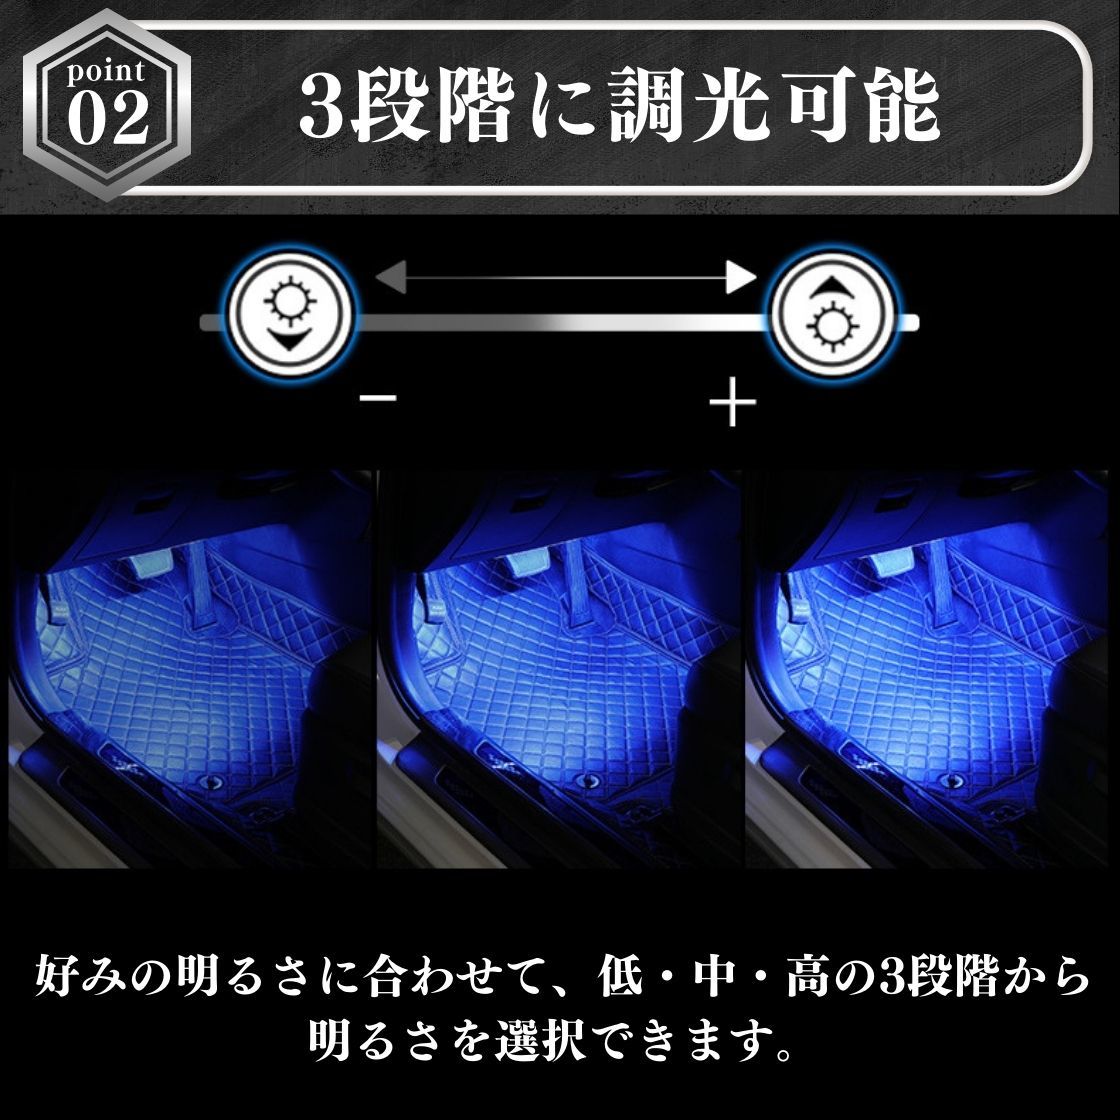 LED テープライト USB 車内 装飾 照明 車内アクセサリー 間接照明 車 リモコン 防水 音楽 白 黄色 フットライト デスク インテリア シール_画像3